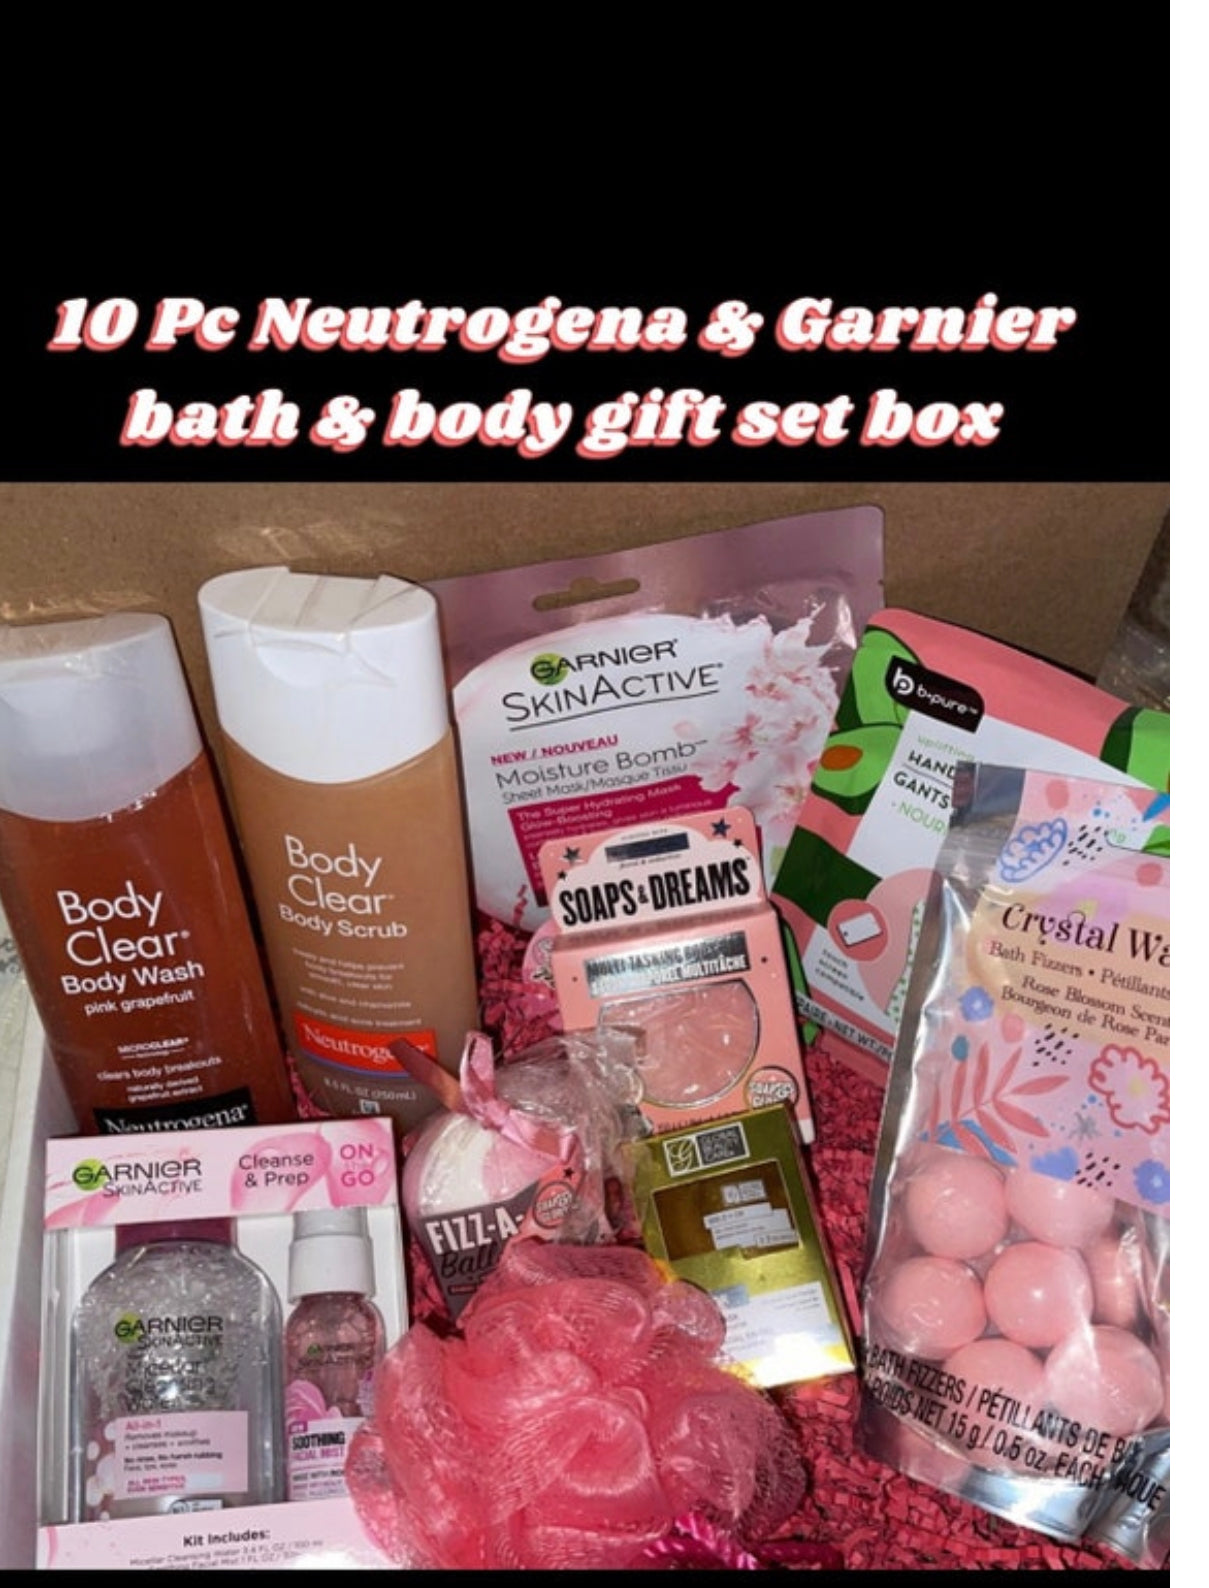 10 Pc Neutrogena & Garnier Gift Set Box valentines day Birthday Shower Get Well Thinking Of You. Free shipping